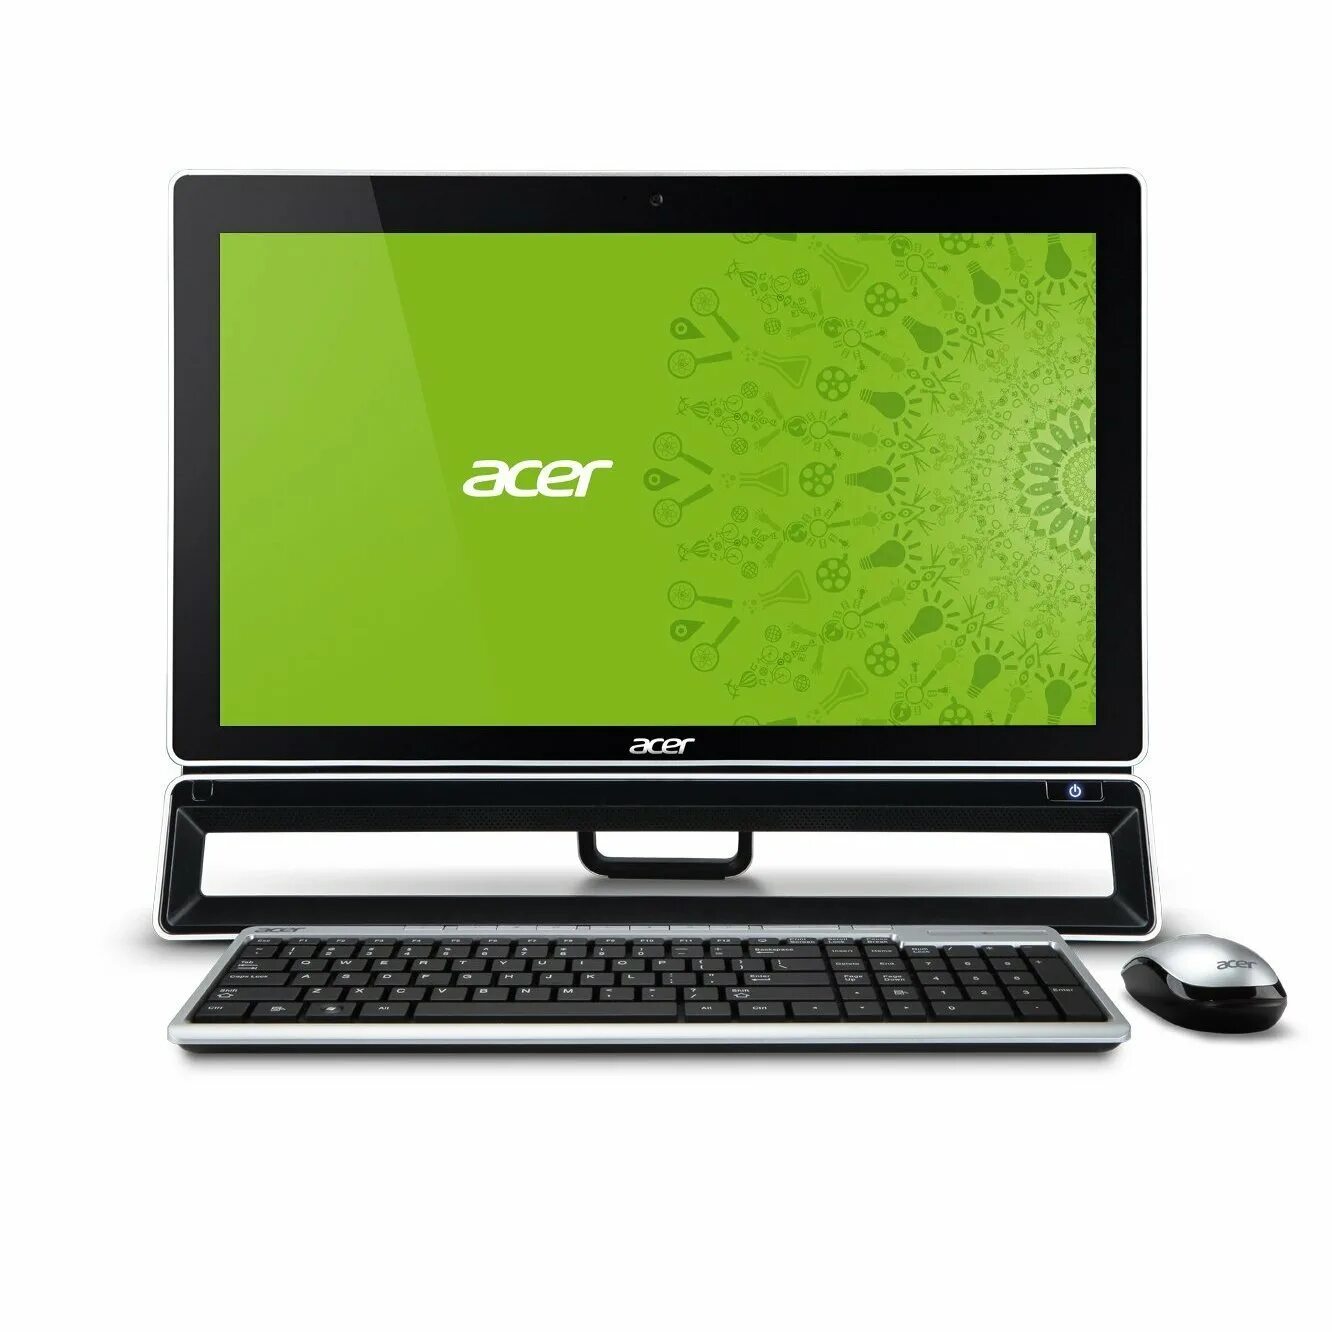 Моноблоки intel pentium. Моноблок Acer Aspire zs600. Моноблок Acer Aspire z5771. Acer Aspire z3770. Acer Aspire z3171.